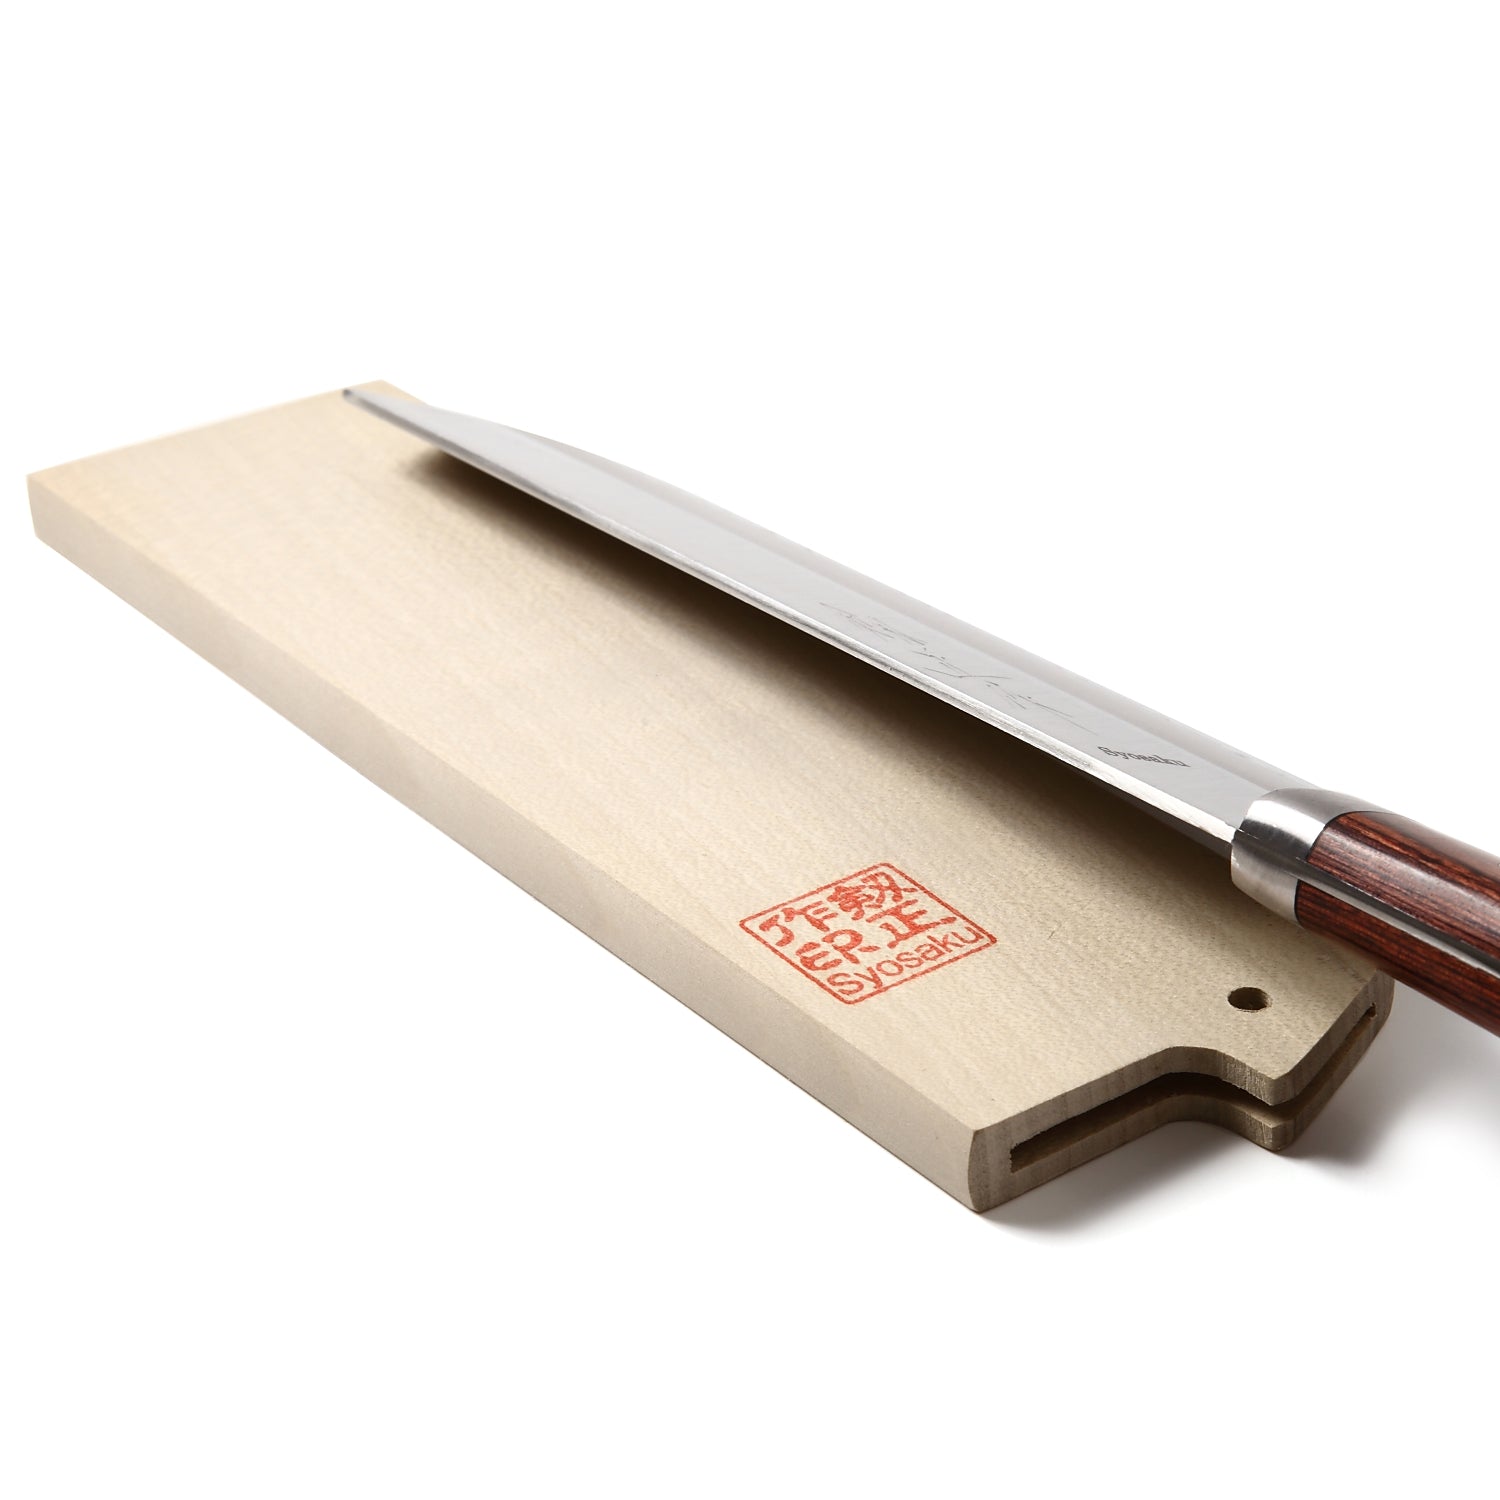 Syosaku Japanese Vegetable Knife VG-1 Gold Stainless Steel Mahogany Handle, Nakiri 6.3-inch (160mm) with Magnolia Wood Sheath Saya Cover